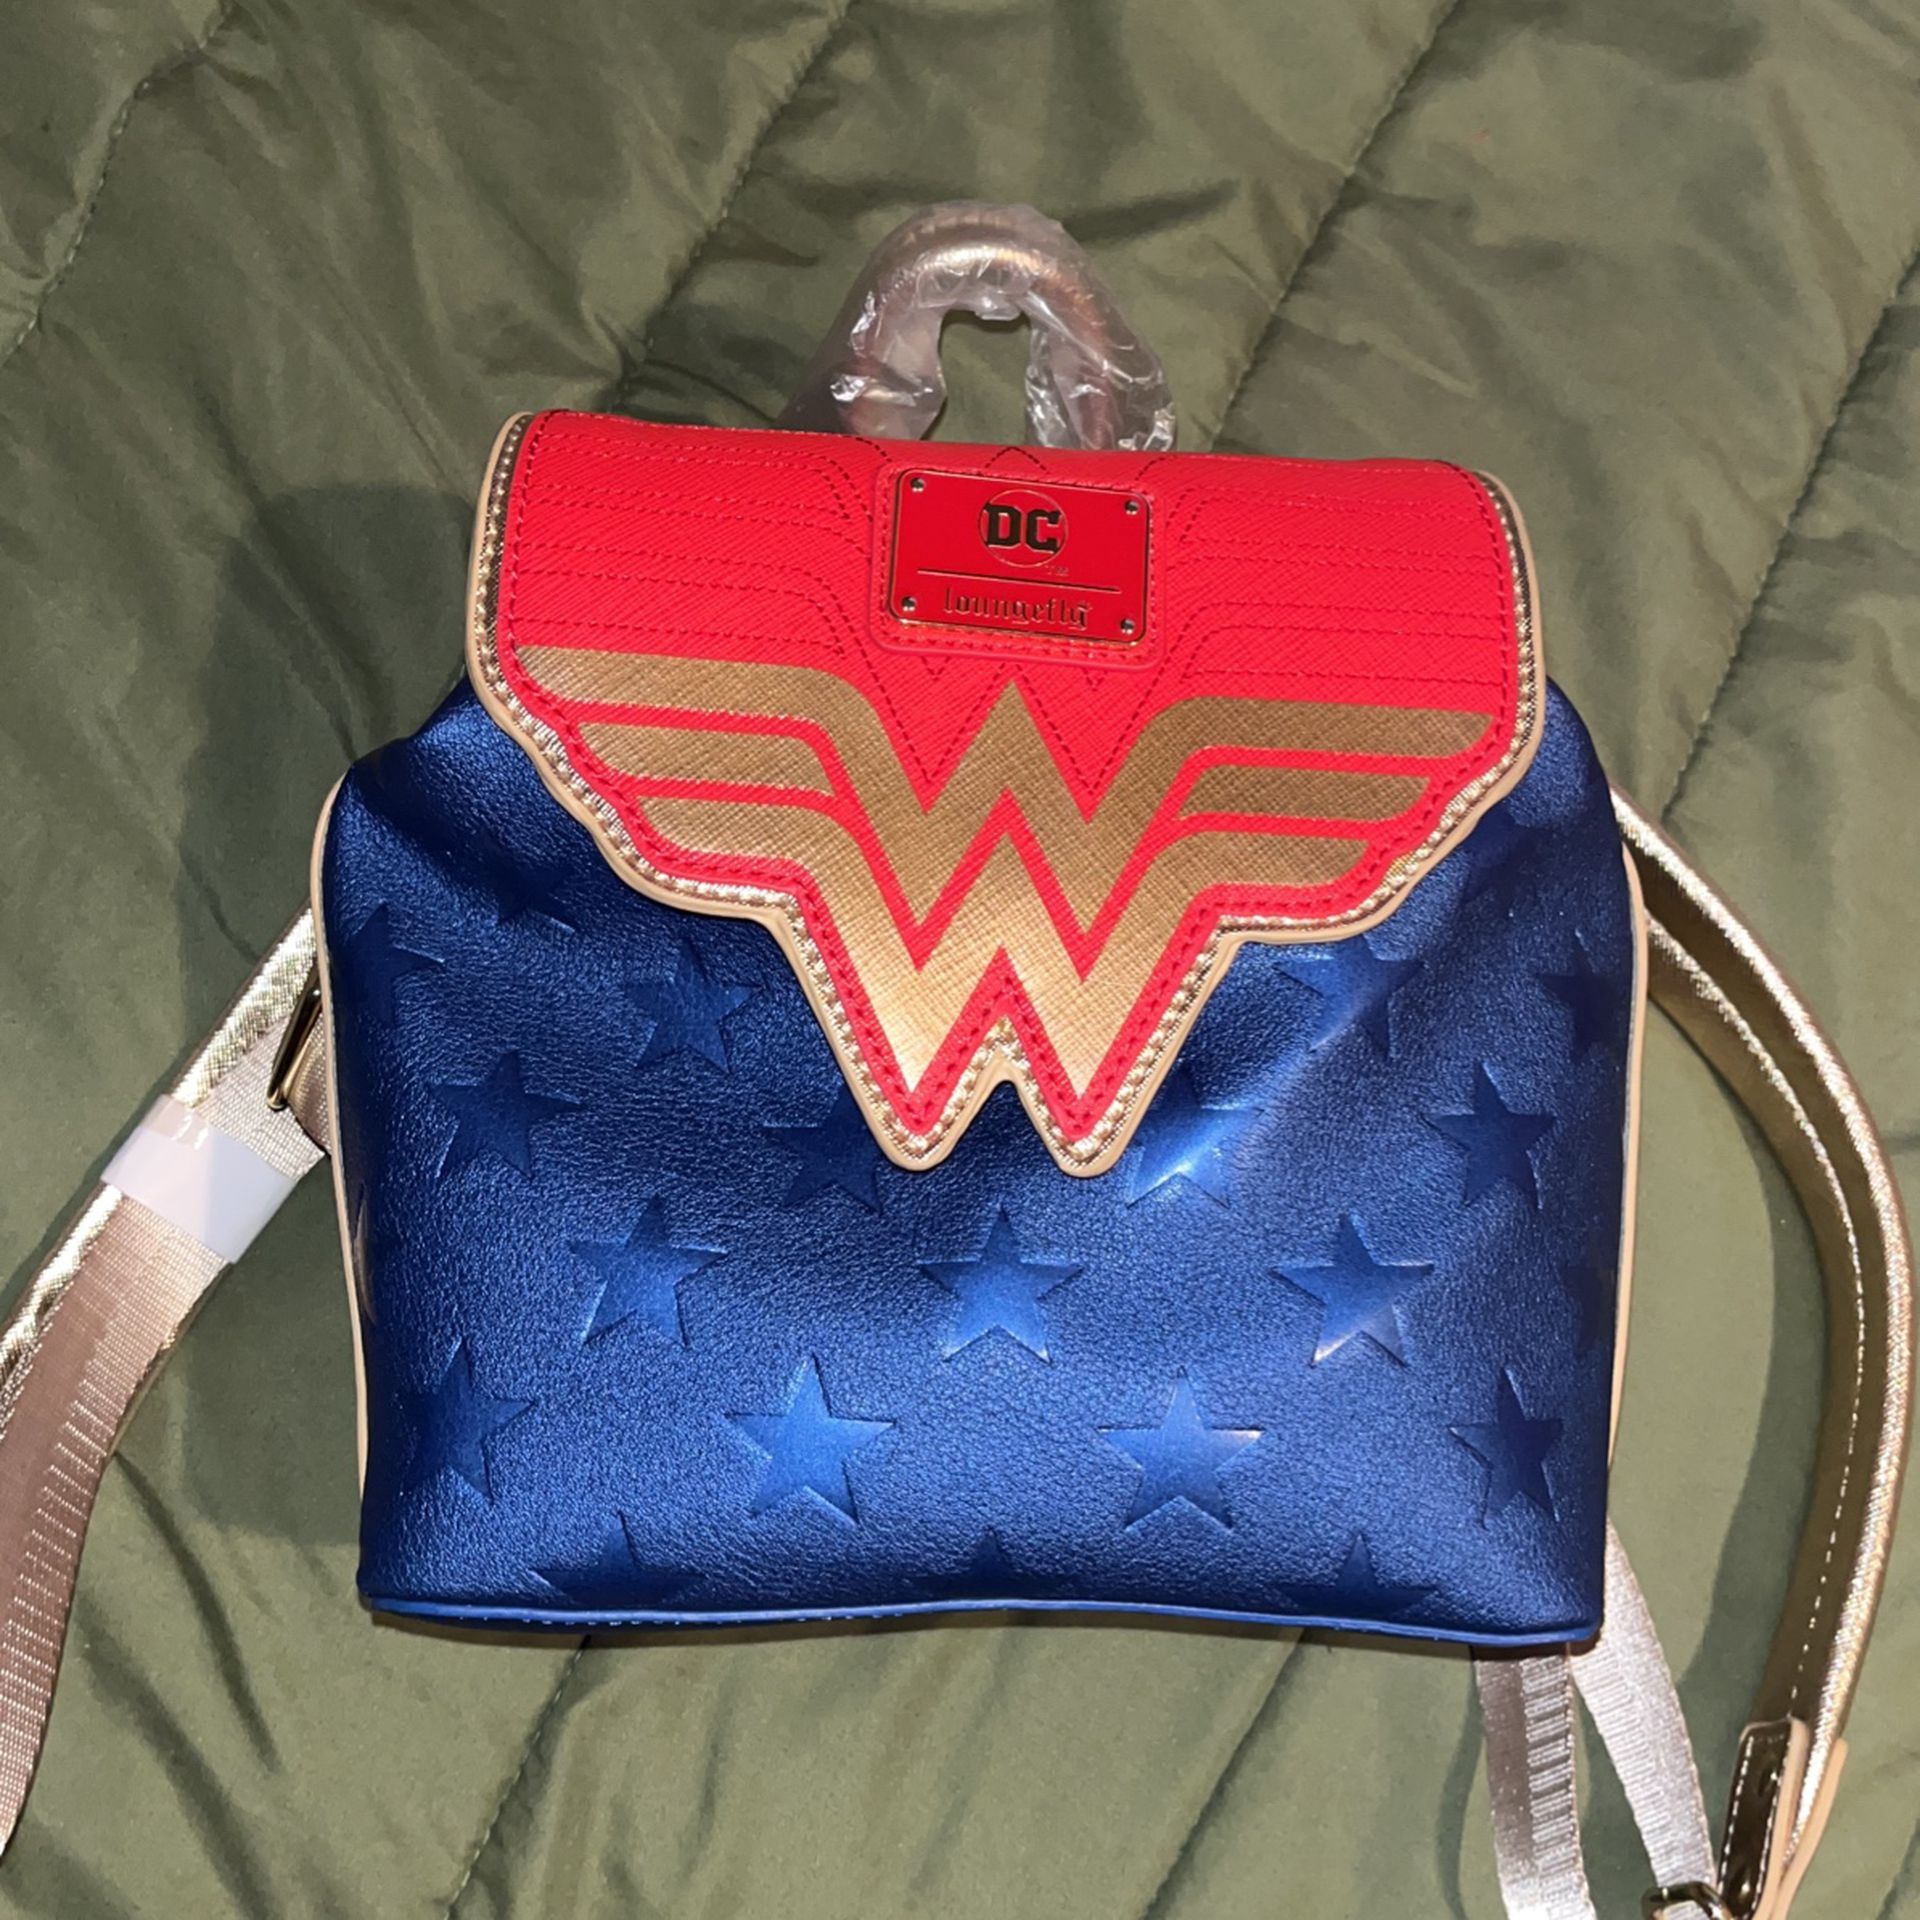 Wonder Woman DC Loungefly 